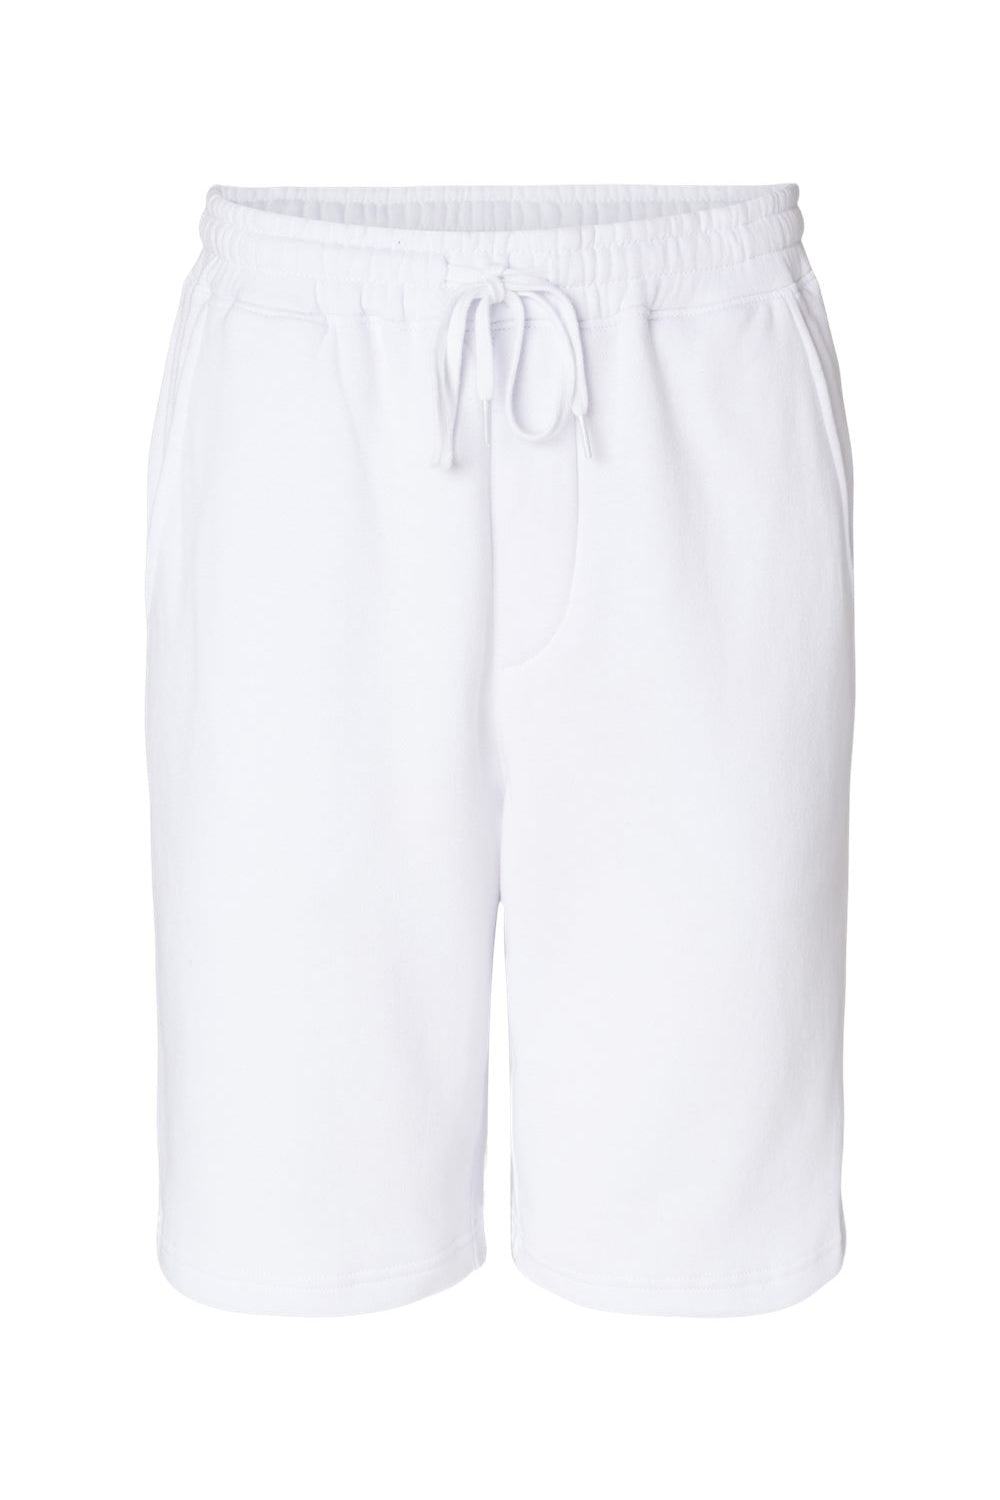 Independent Trading Co. IND20SRT Mens Fleece Shorts w/ Pockets White Flat Front